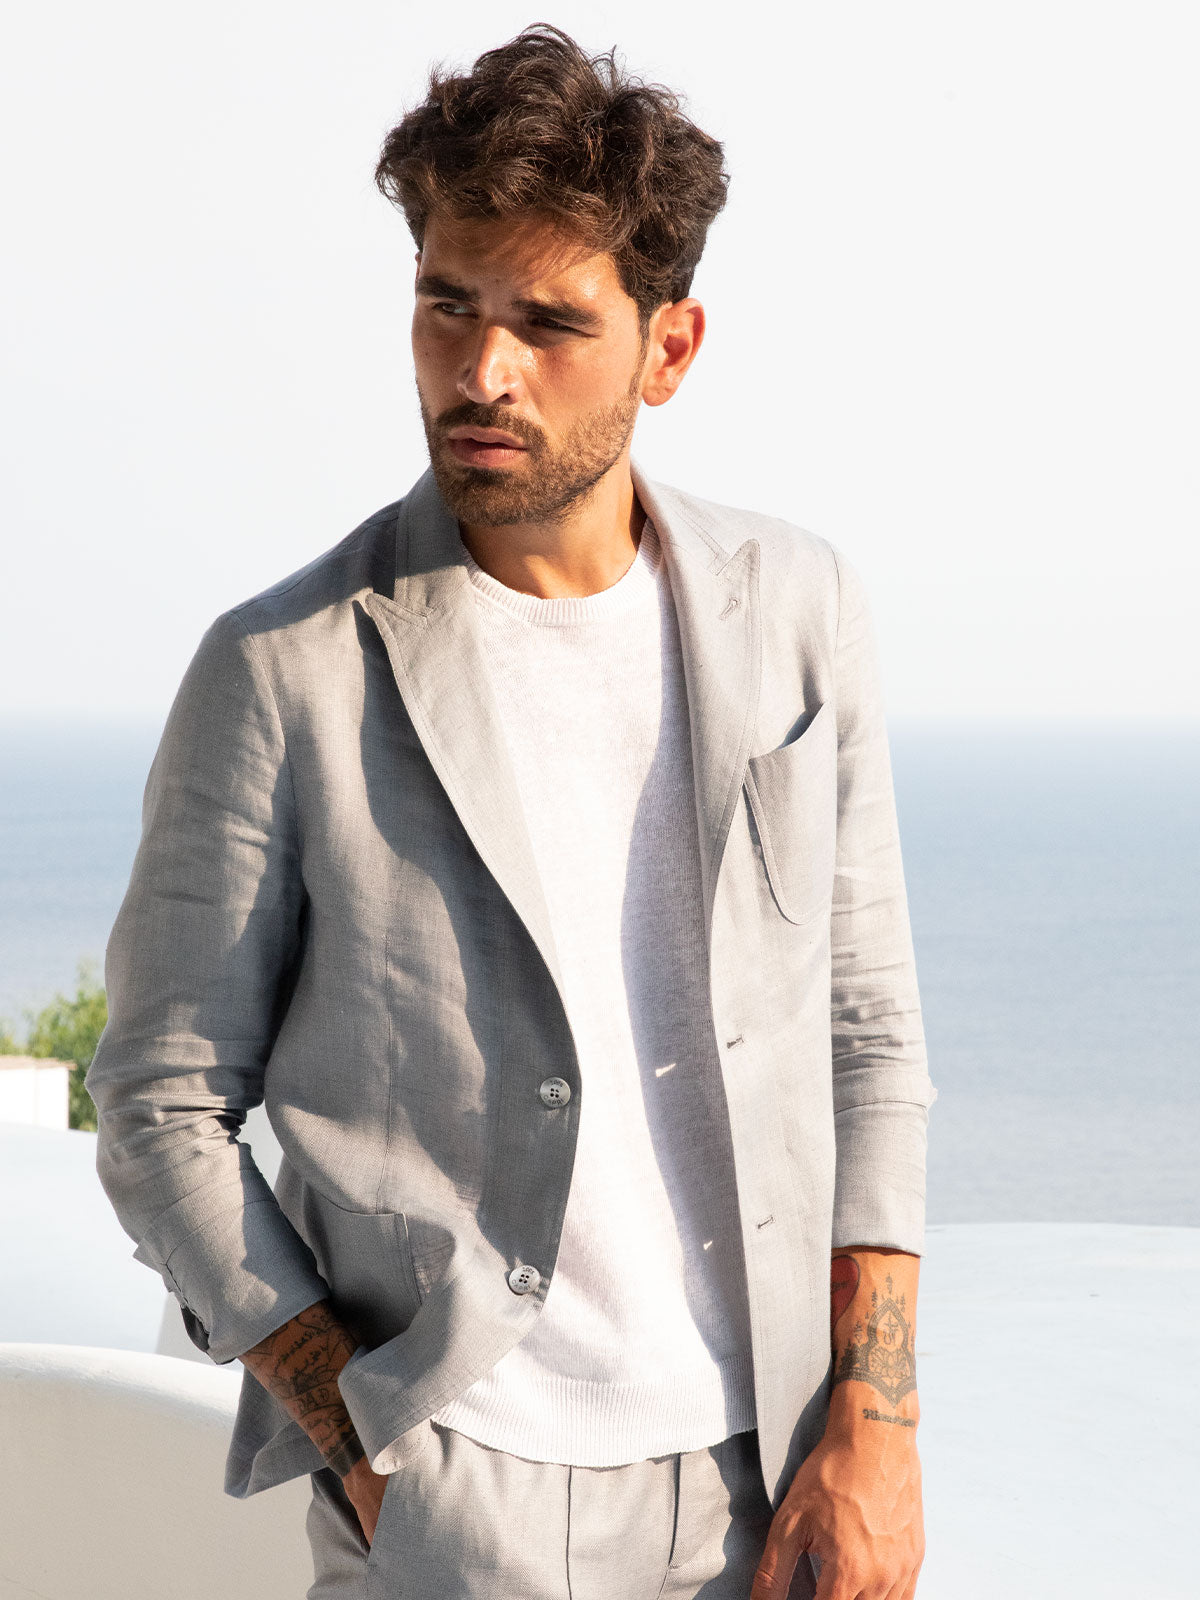 Giacca St. Tropez 100% Capri light grey linen jacket for man  worn by model